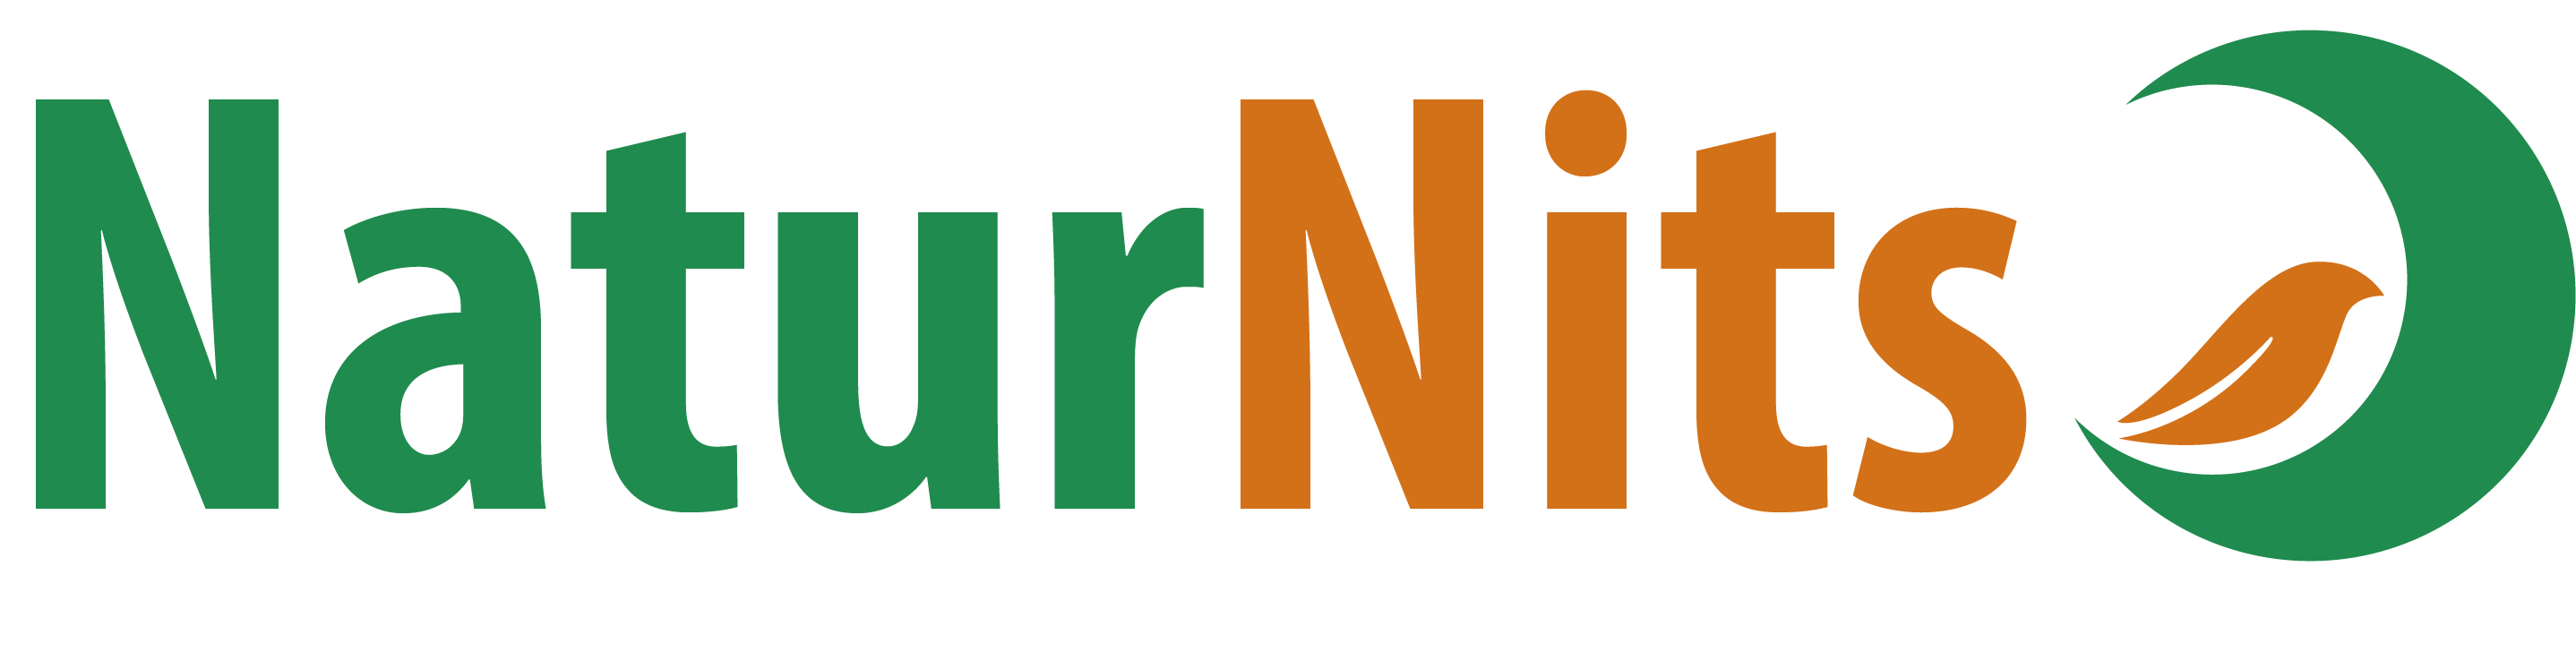 Naturnits logo